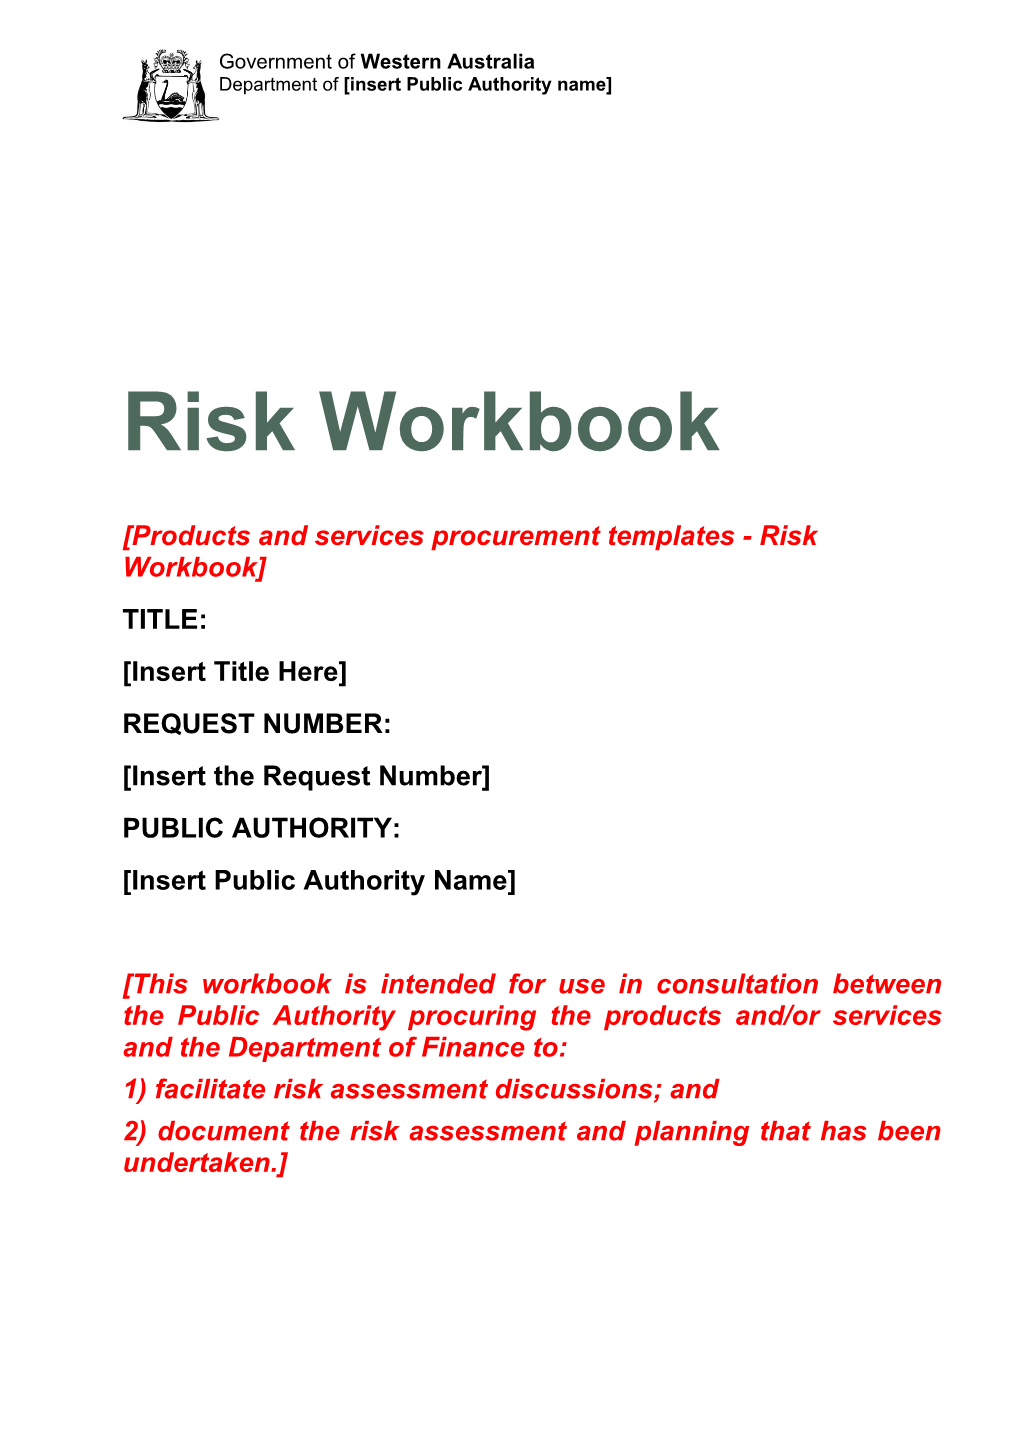 Risk Workbook Template